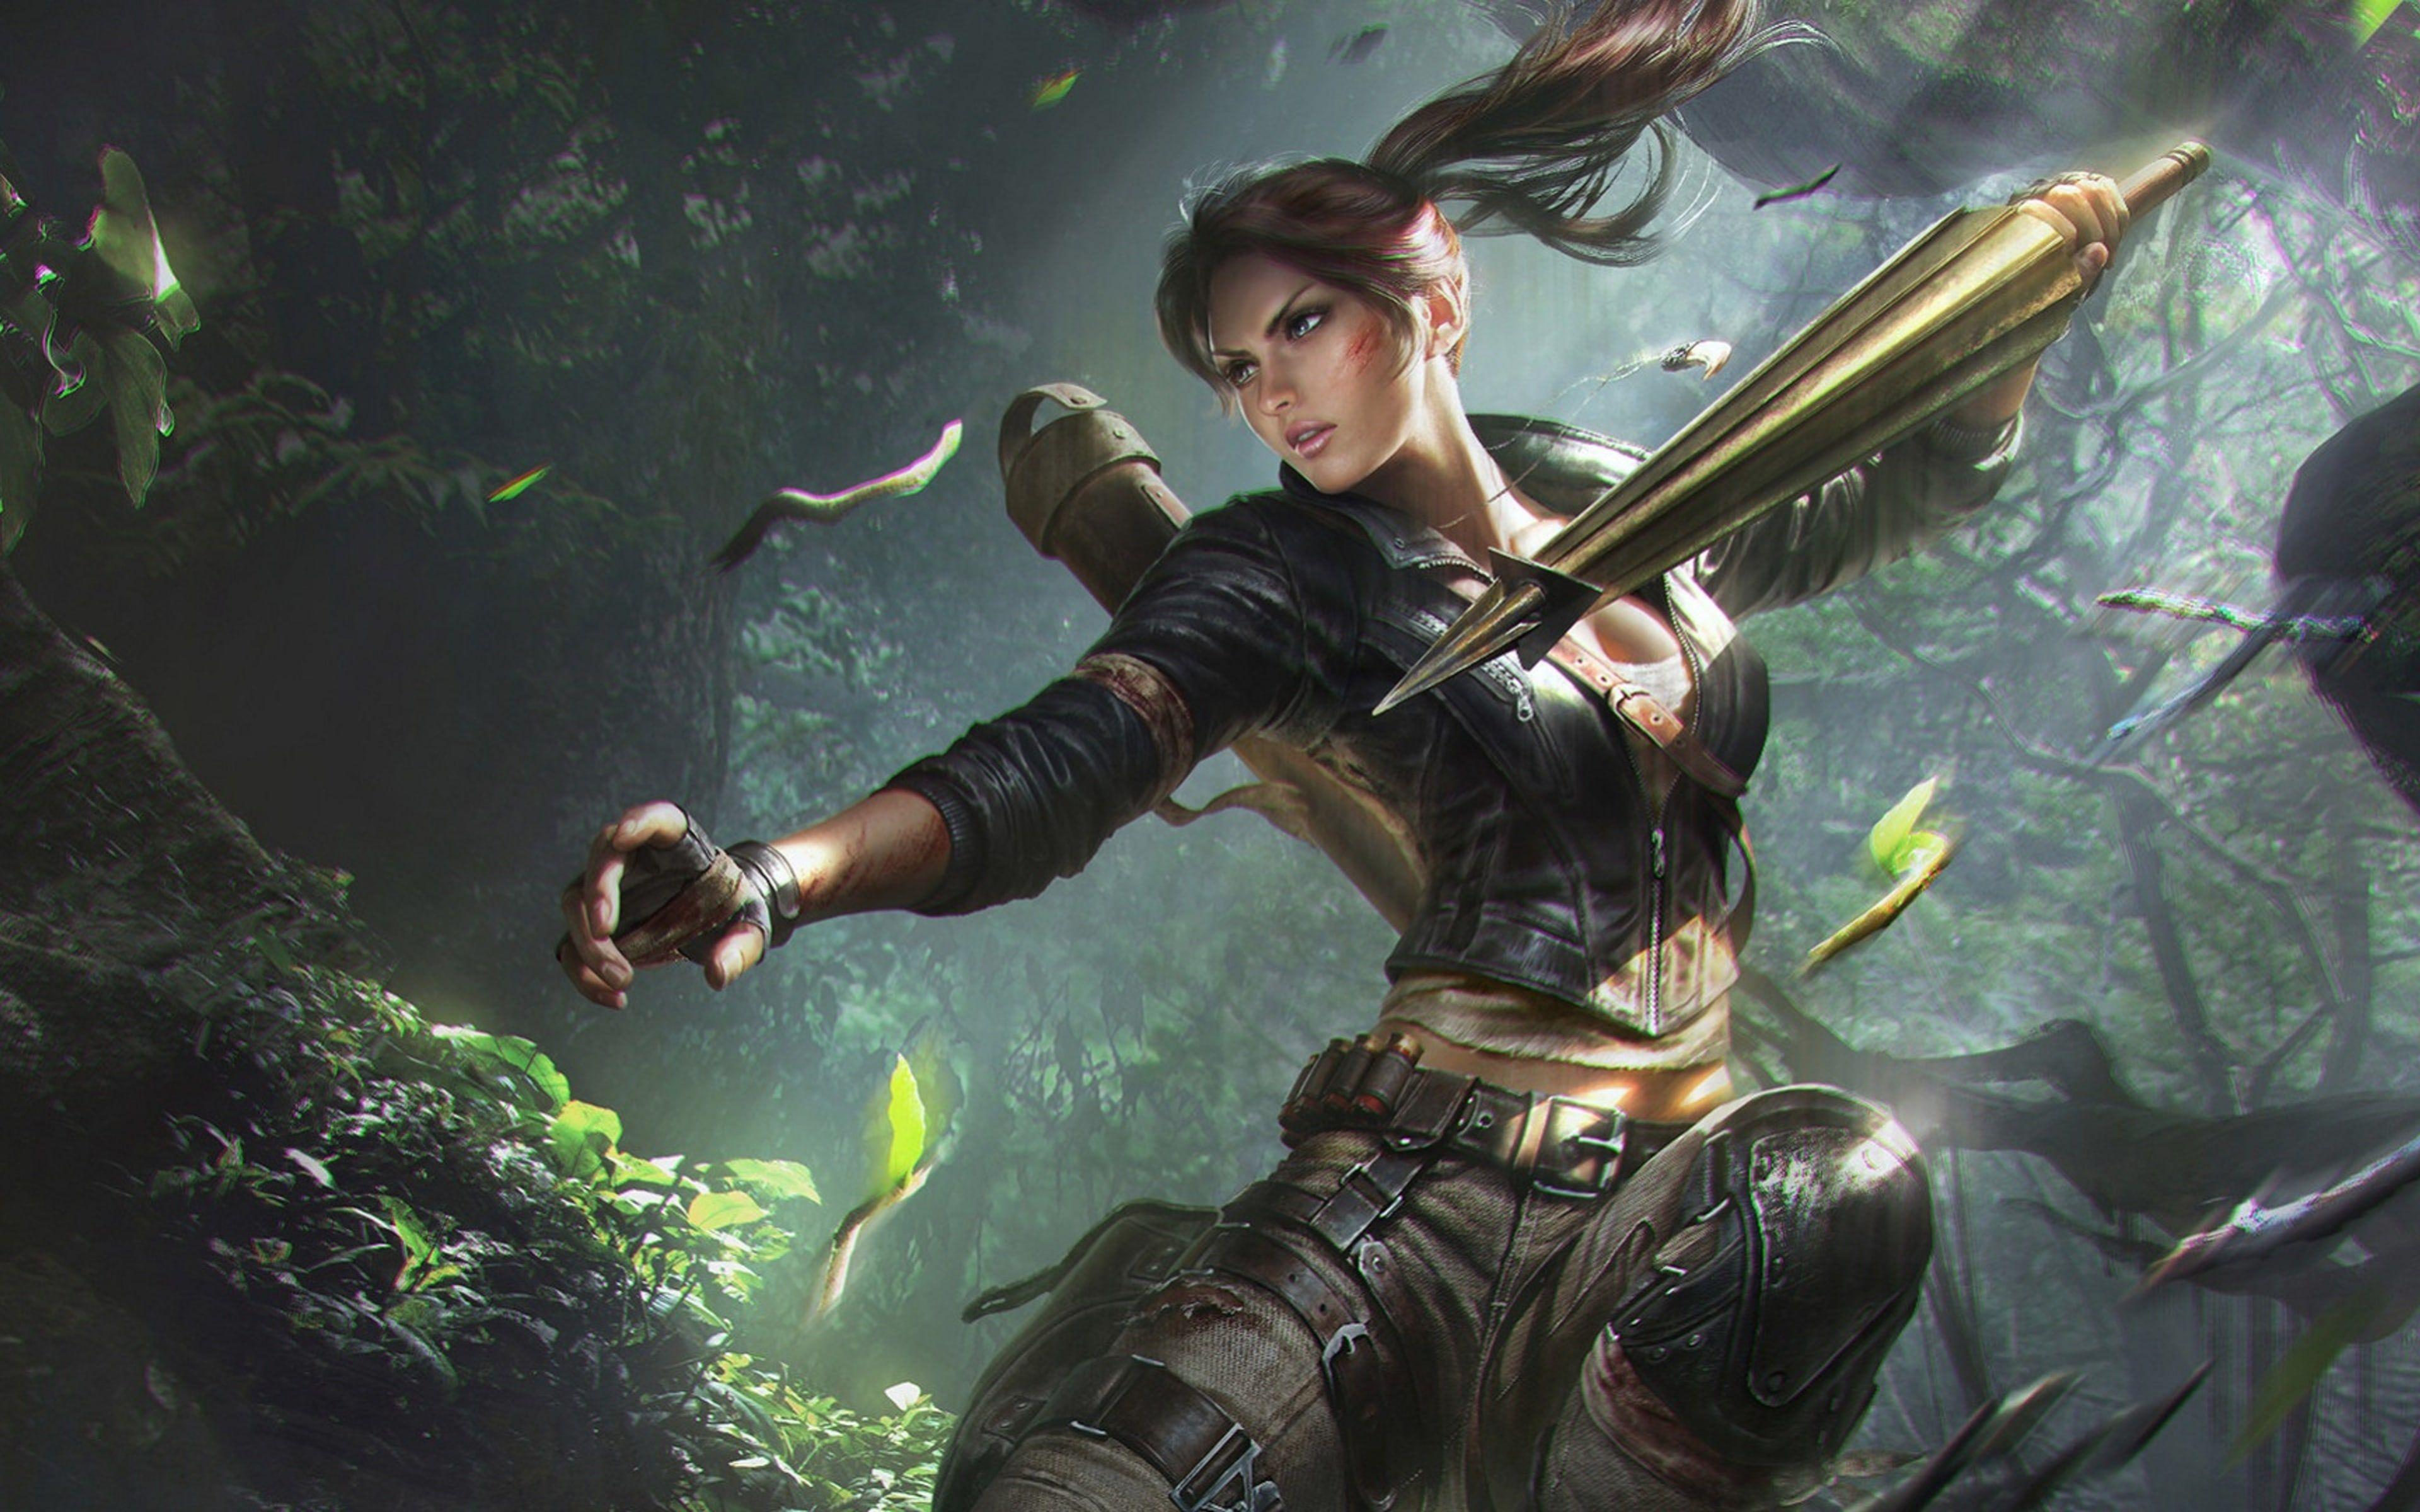 Lara Croft Tomb Riader Digital Art Wallpaper and Free Stock